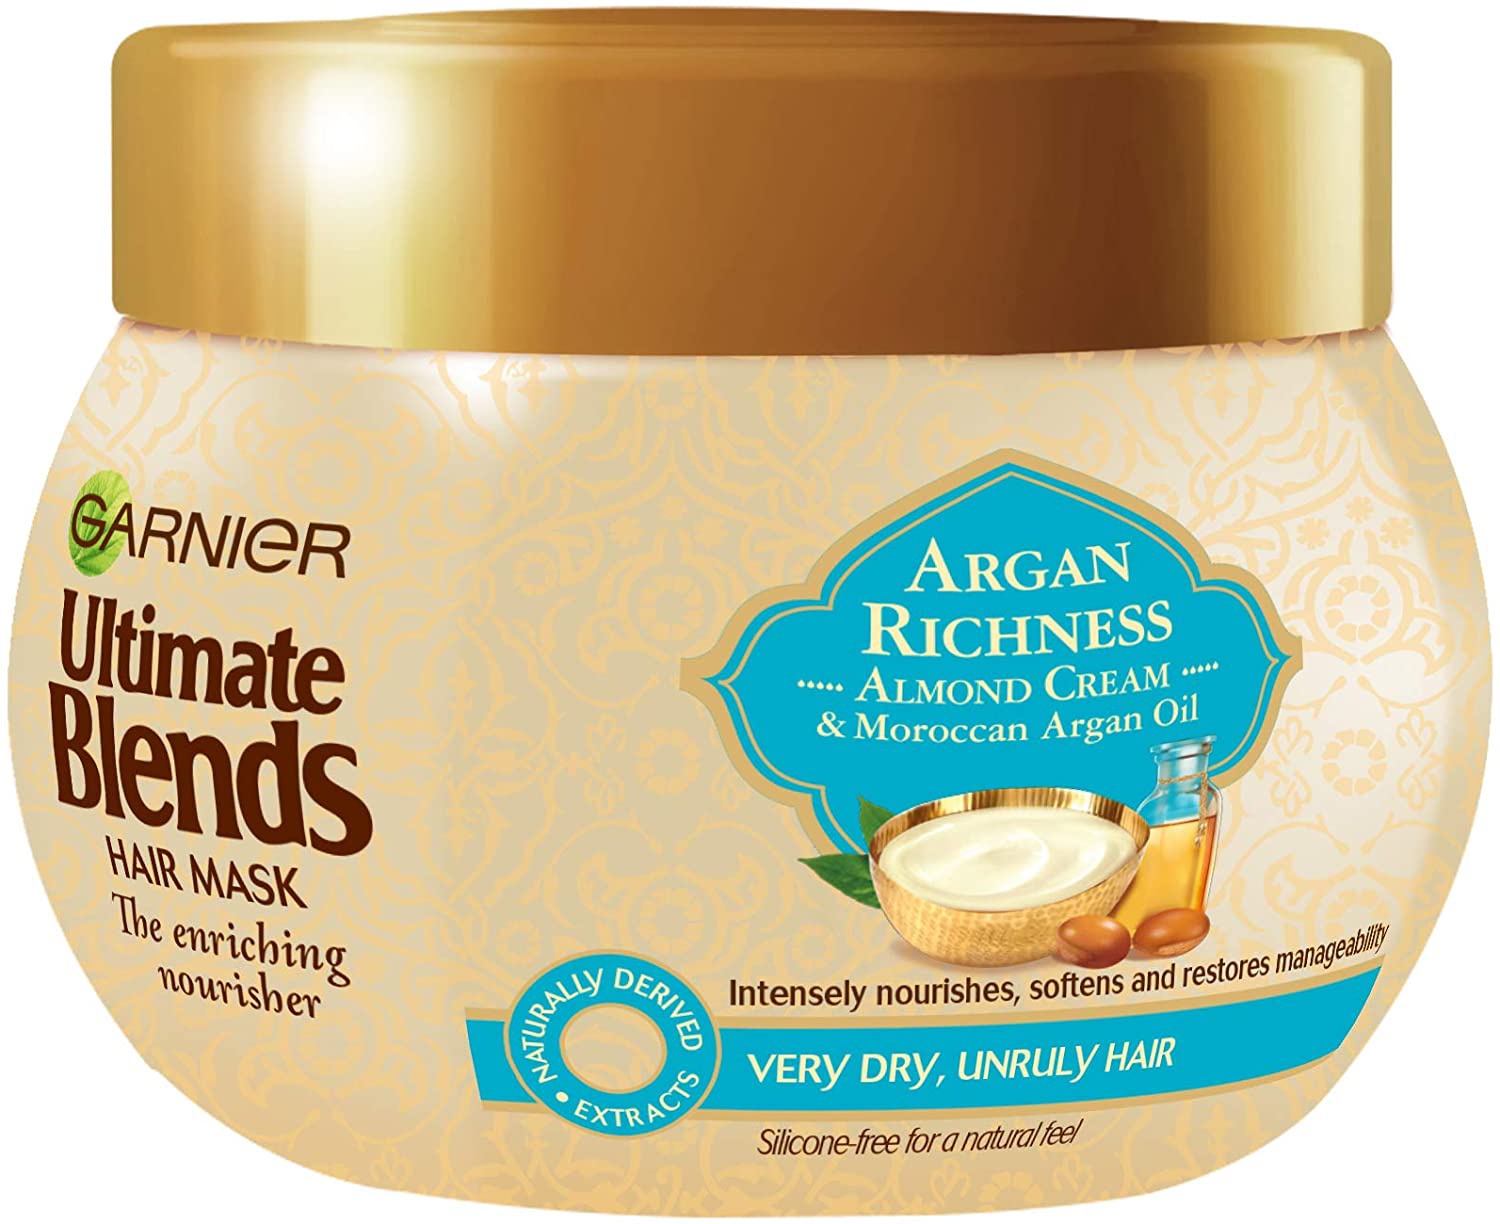 Garnier Ultimate Blends Argan Oil & Almond Cream Hair Mask